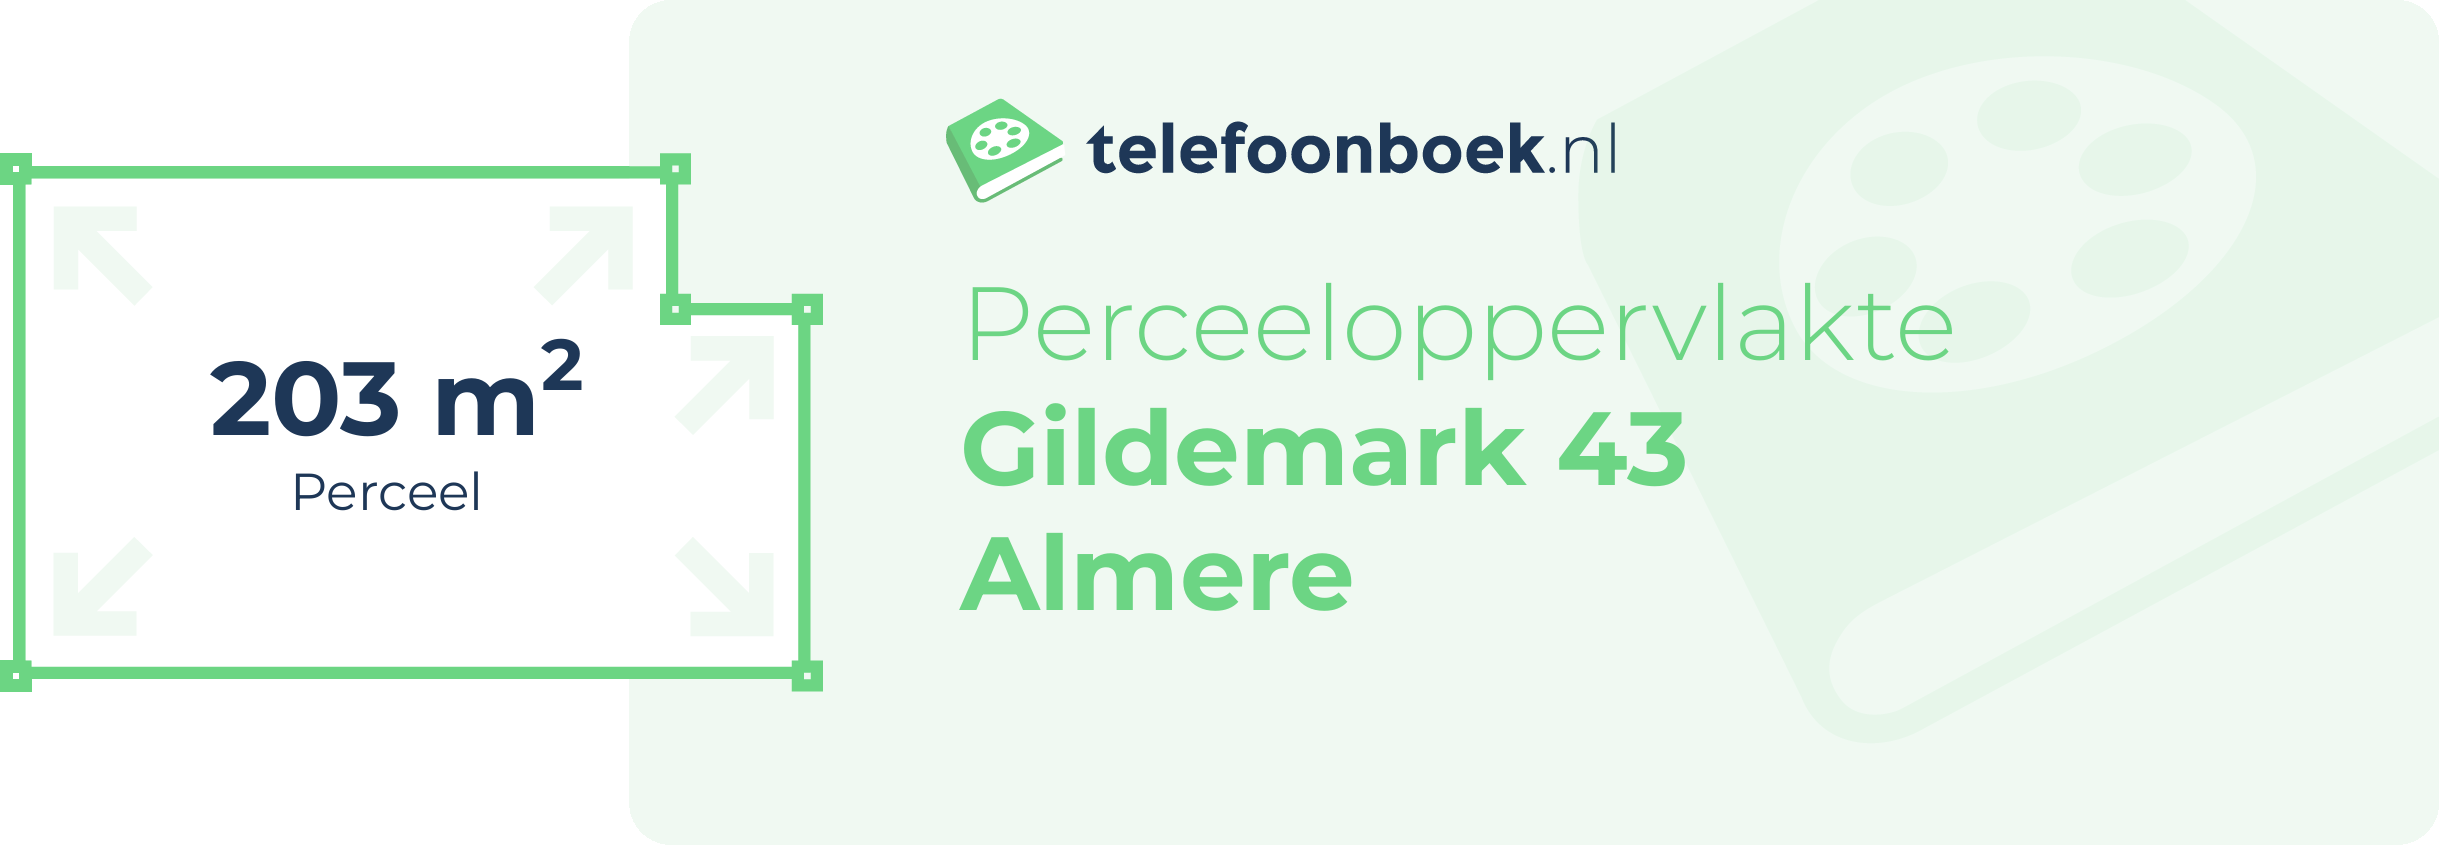 Perceeloppervlakte Gildemark 43 Almere